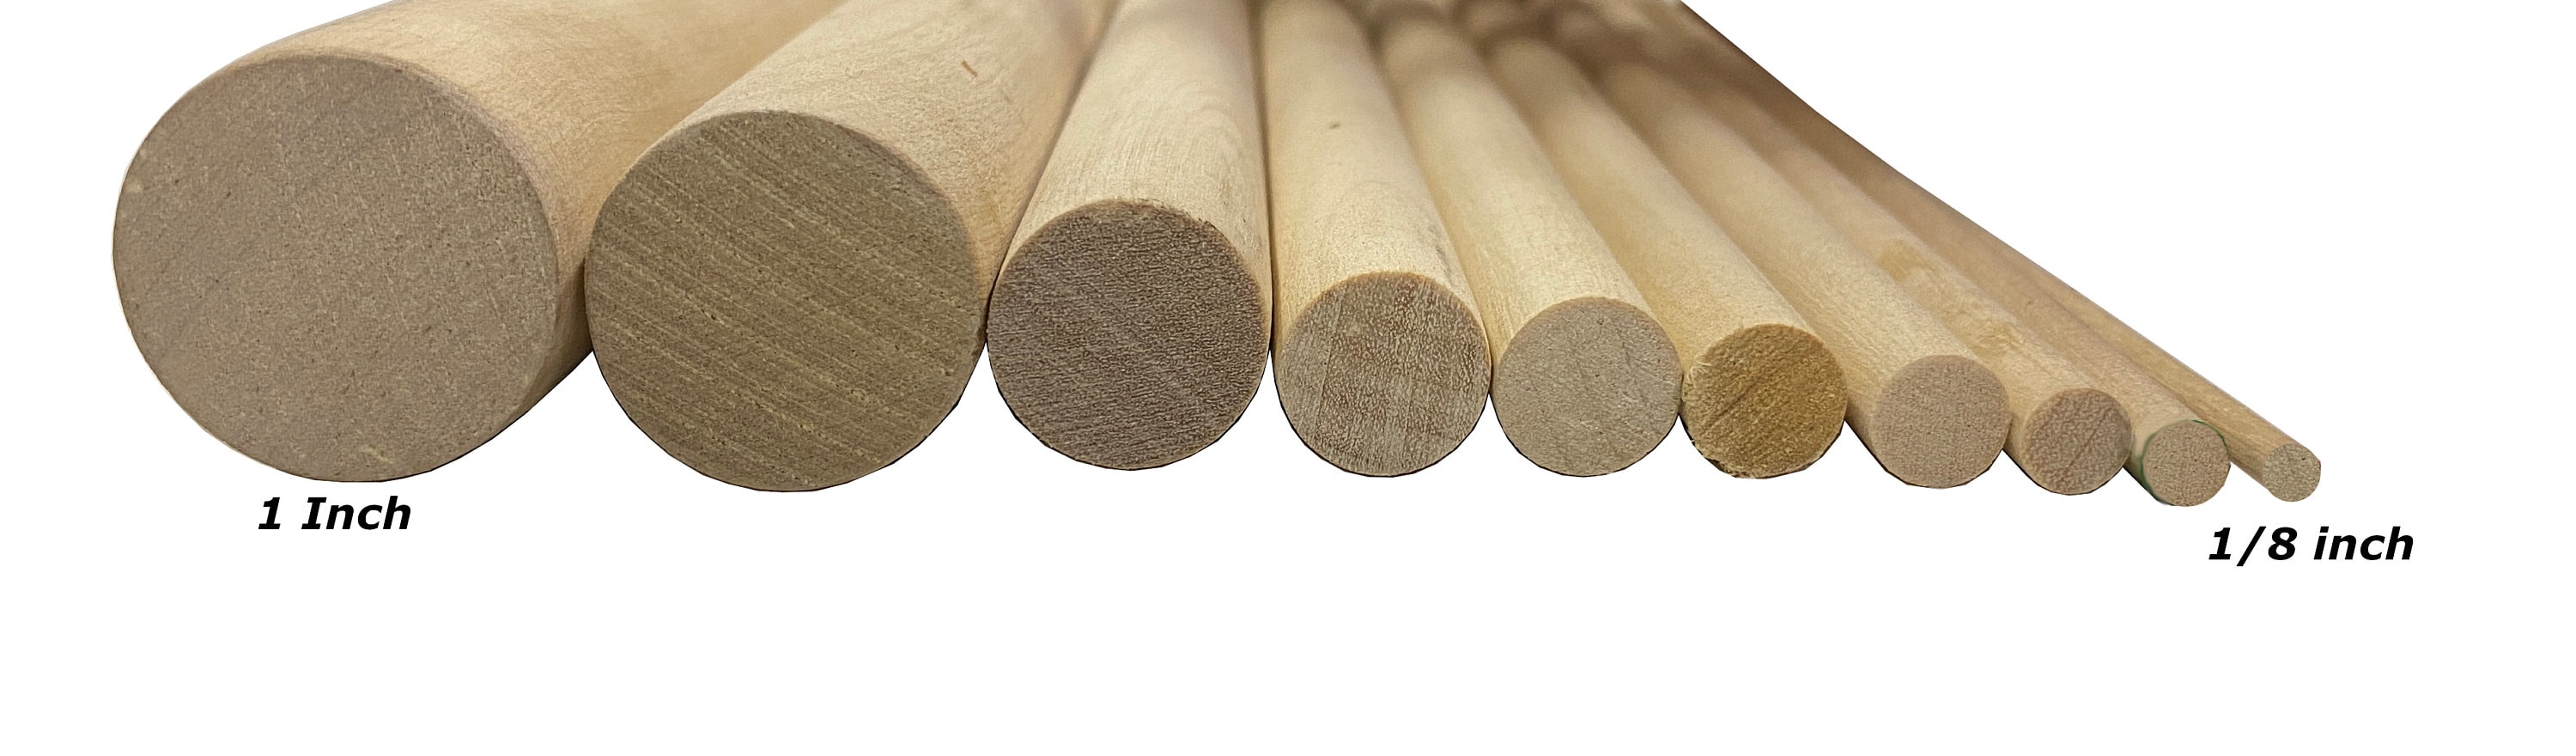 Wood Dowel Rod 36″ 11 Sizes